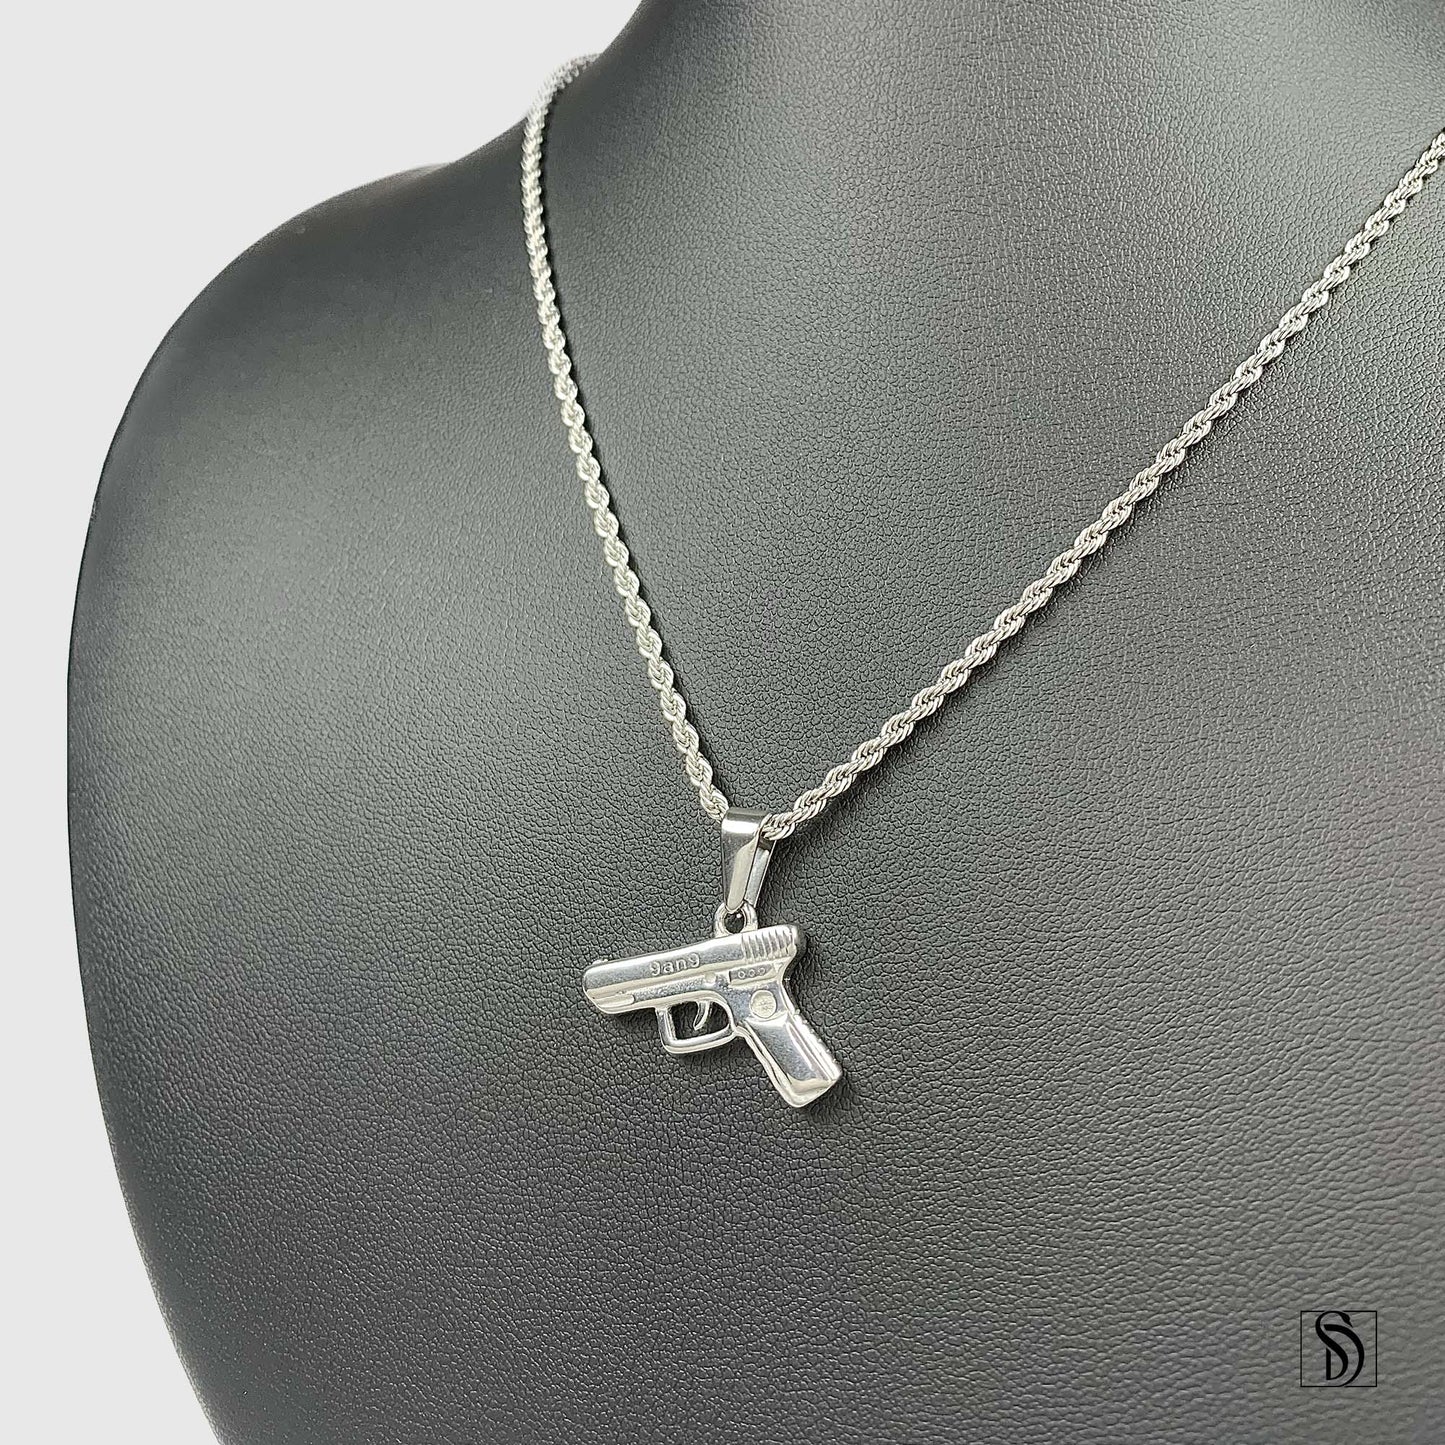 Silver 9mm Pistol Hand Gun Pendant Necklace